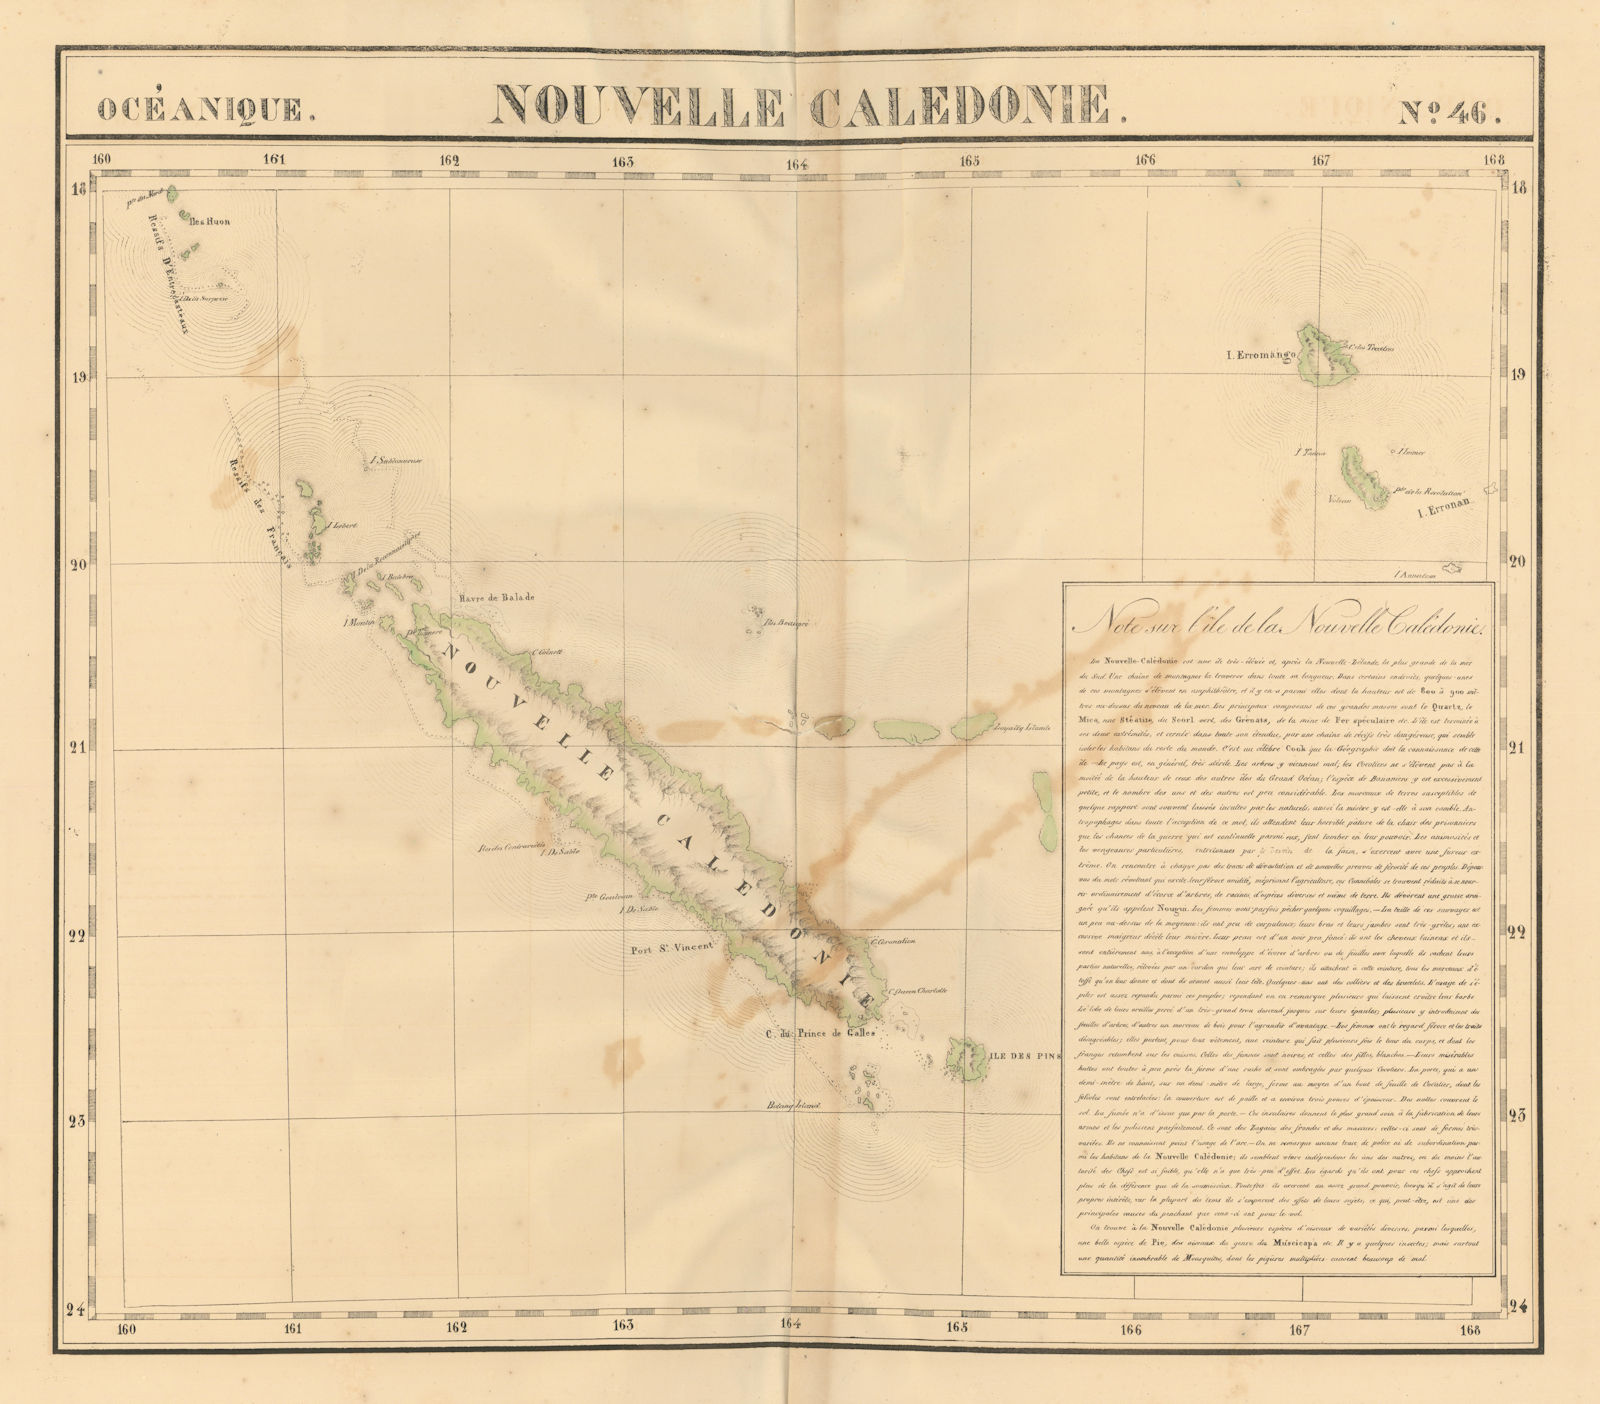 Océanique. Nouvelle Caledonie #46. New Caledonia Vanuatu. VANDERMAELEN 1827 map